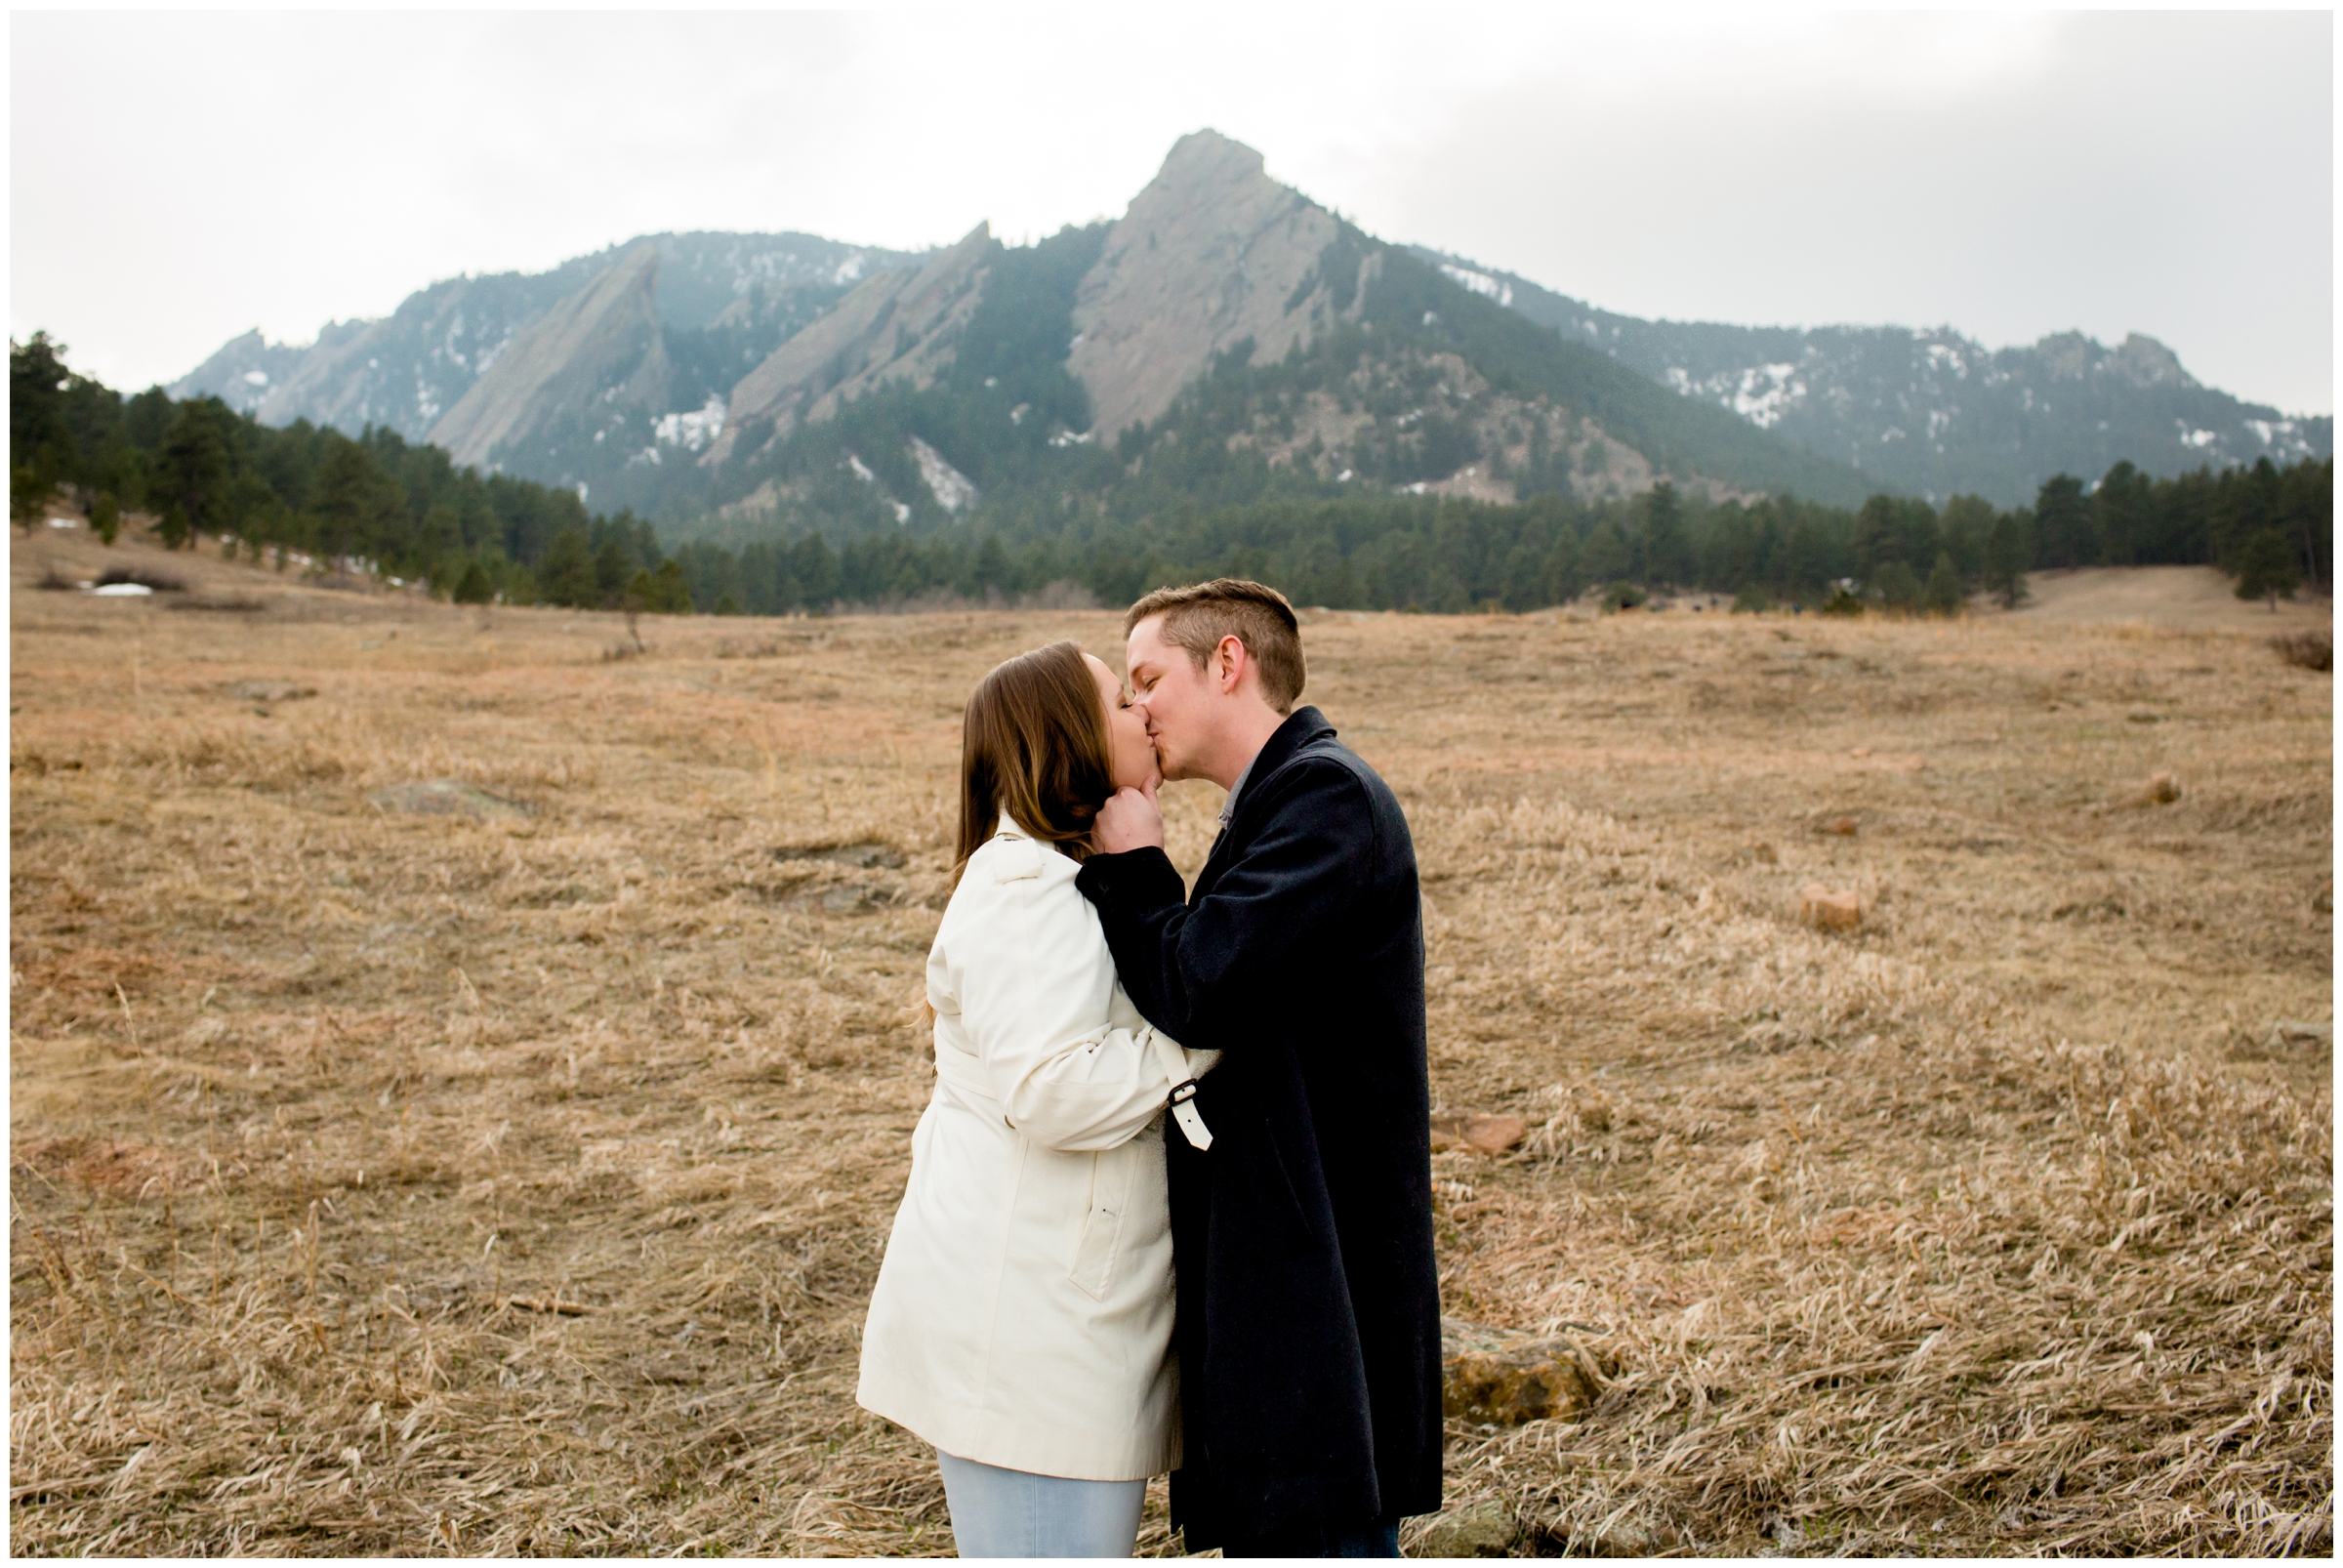 Boulder Colorado engagement pictures at Chautauqua Park by wedding photographer Plum Pretty Photography